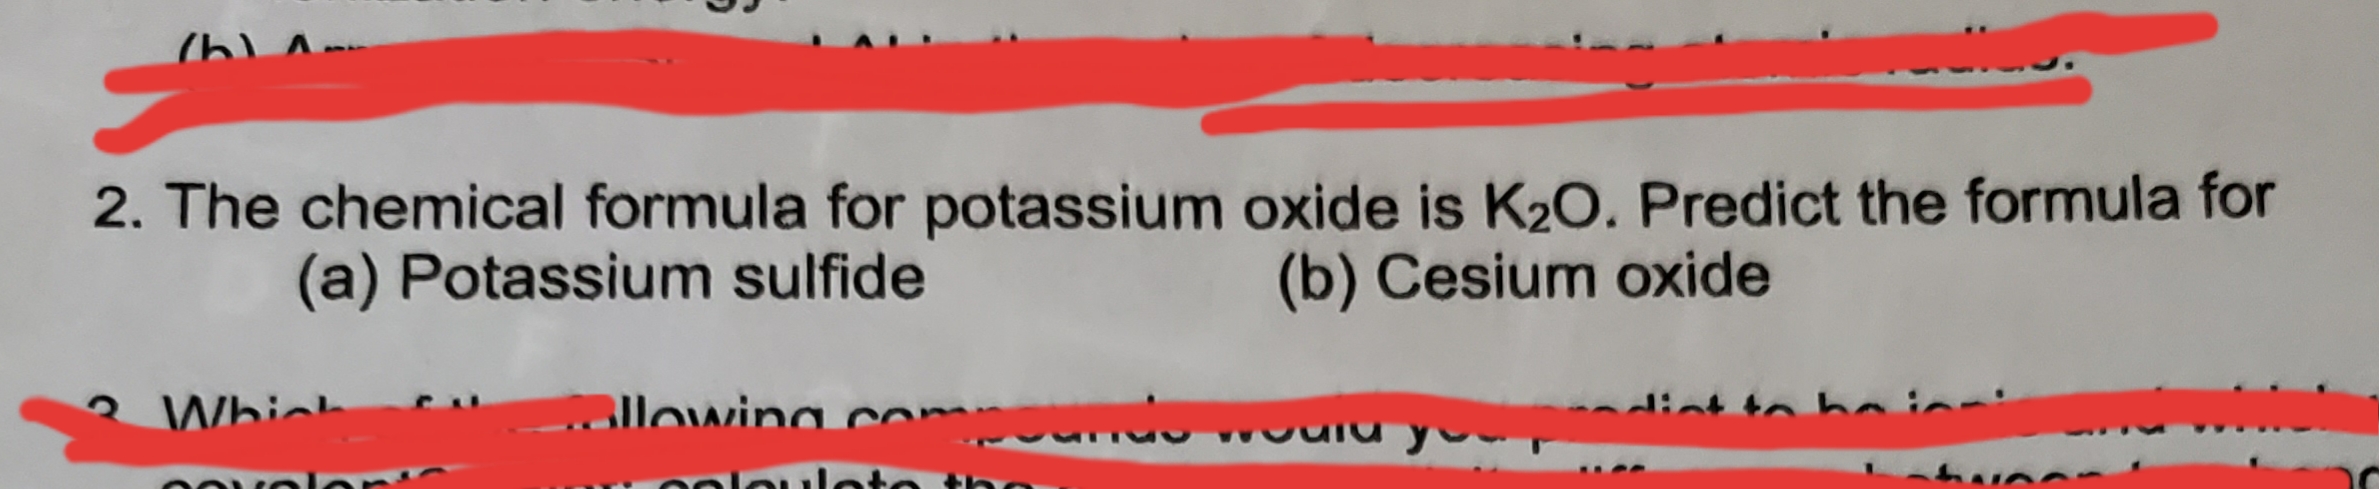 2. The chemical formula for potassium oxide is K2O. Predict the formula for
(b) Cesium oxide
(a) Potassium sulfide
a compoundo
Whih
